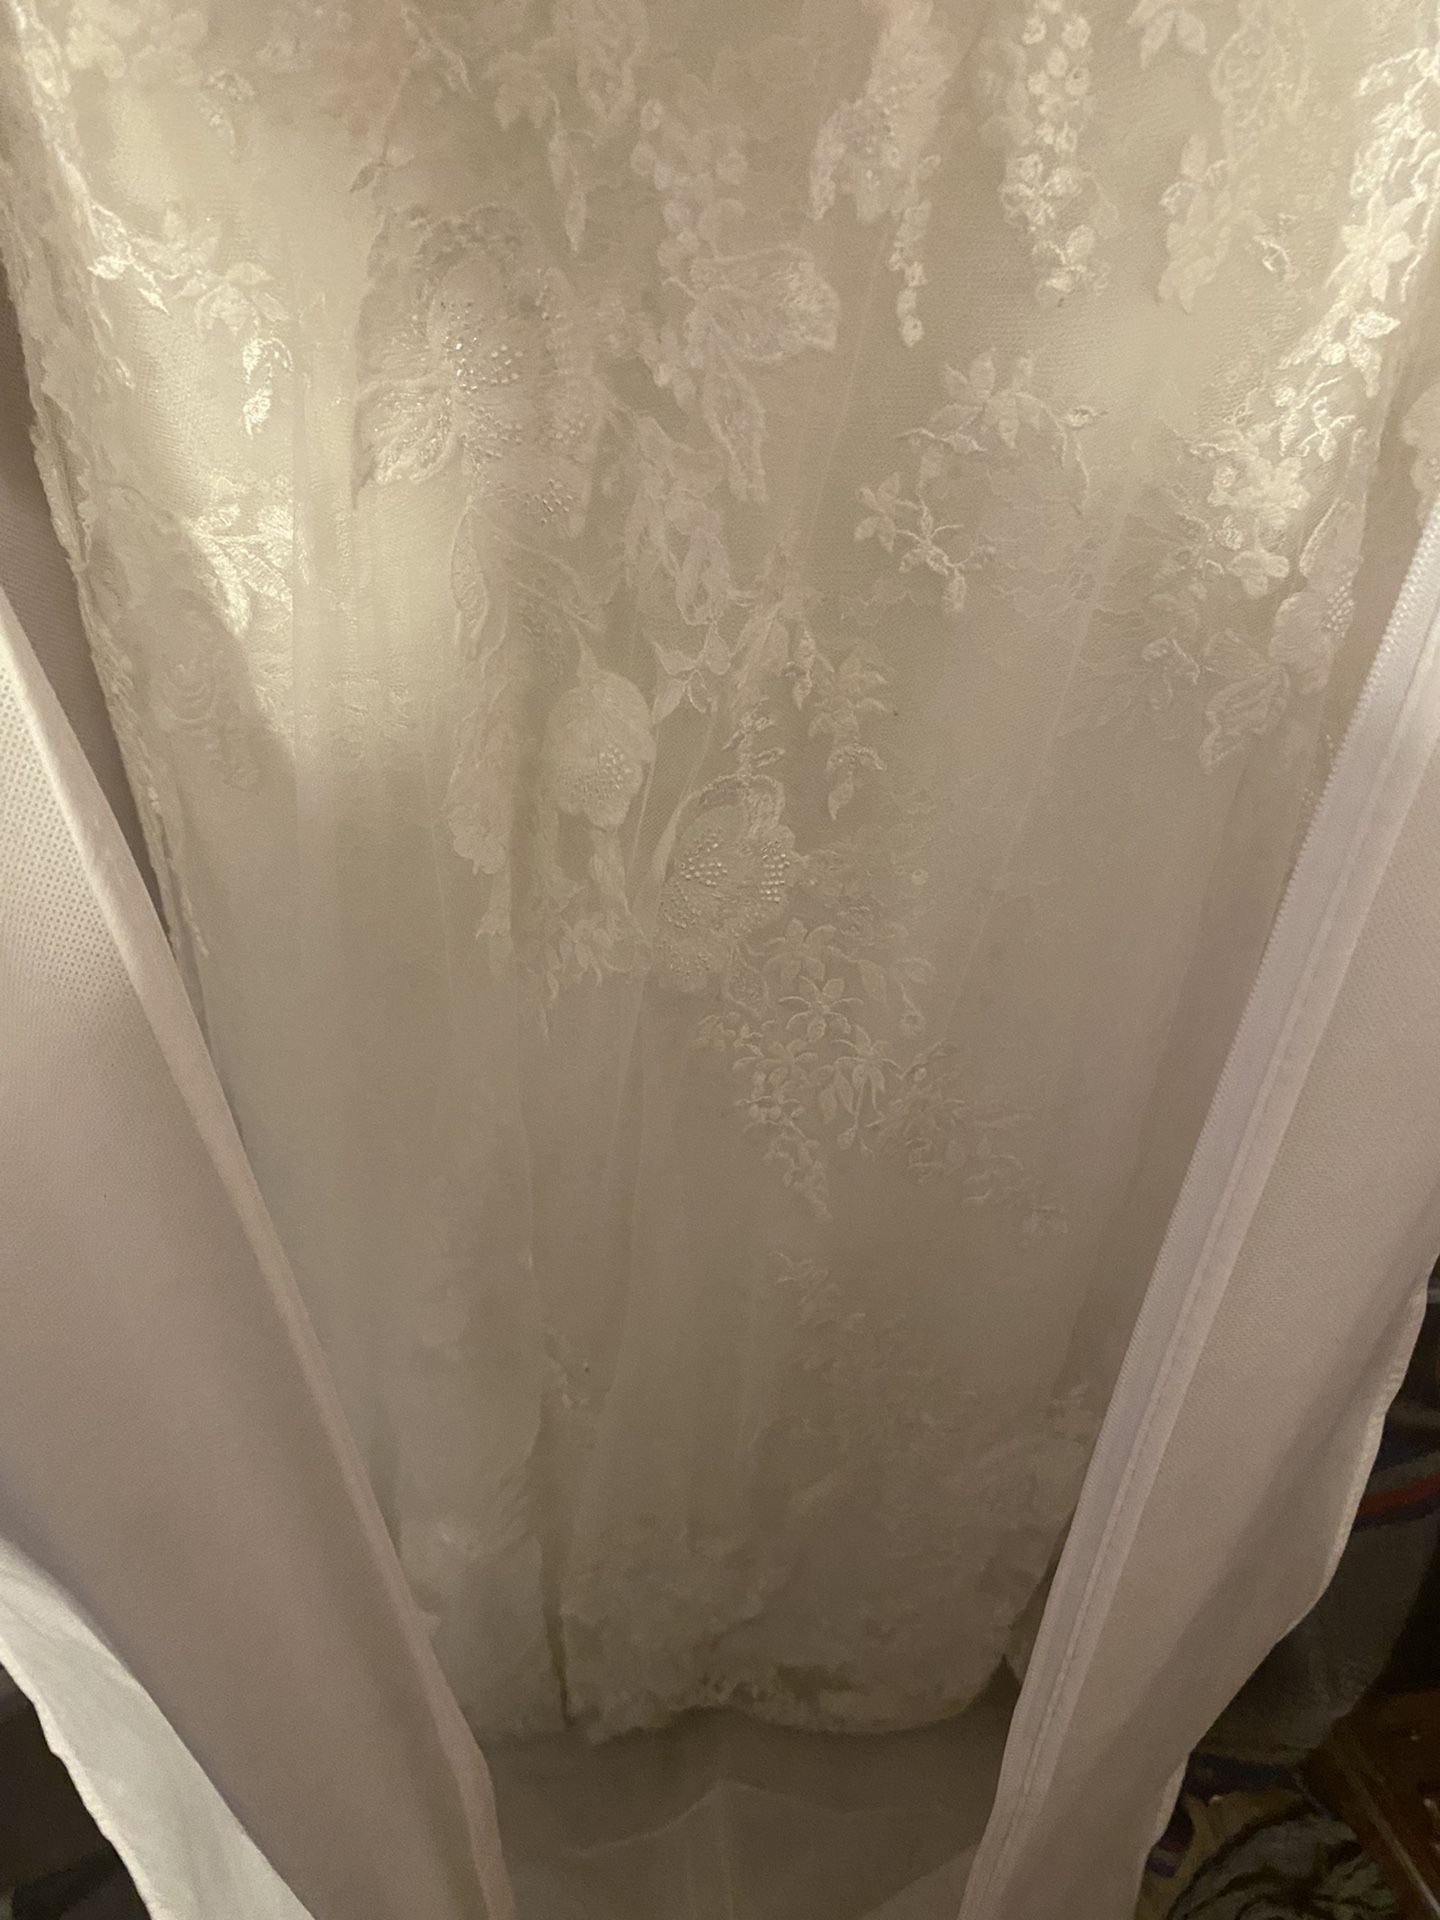 Mori Lee Wedding Dress Suzanne Ivory Size 10